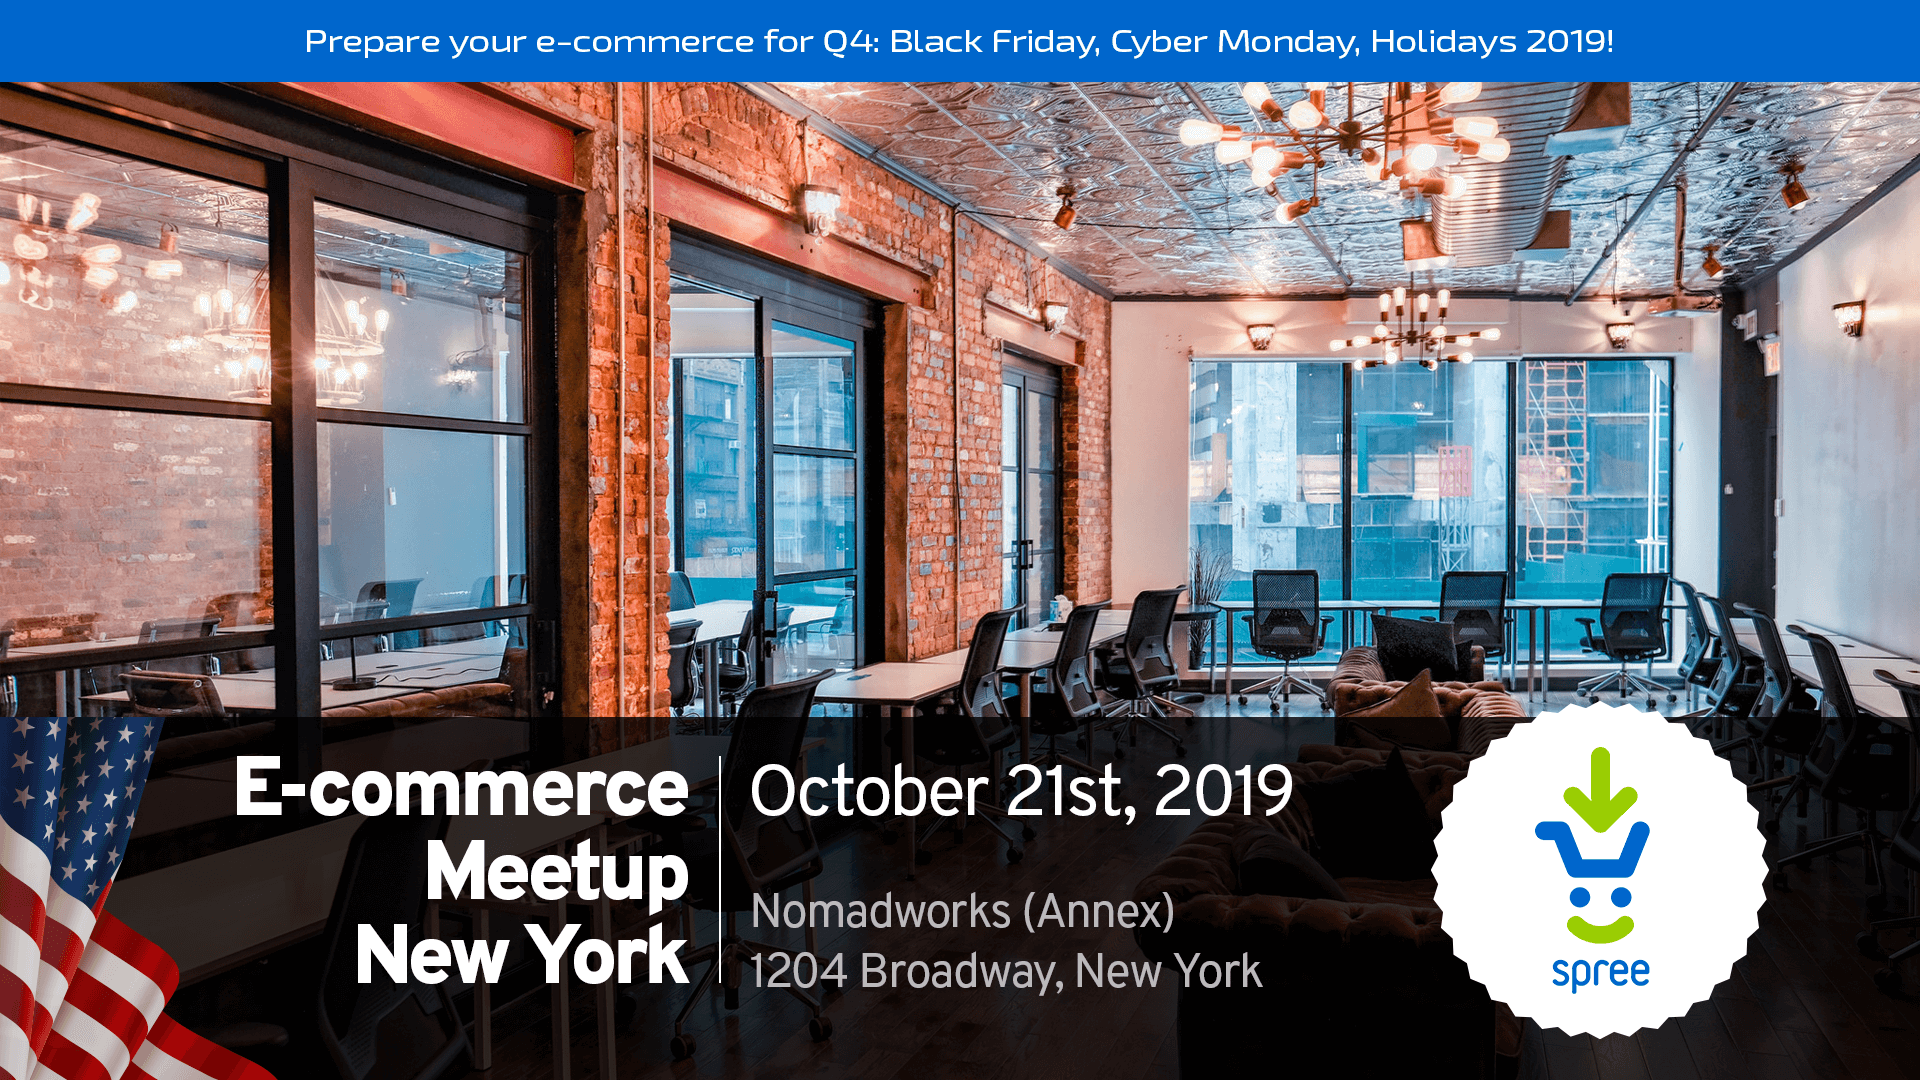 E-commerce Meetup New York